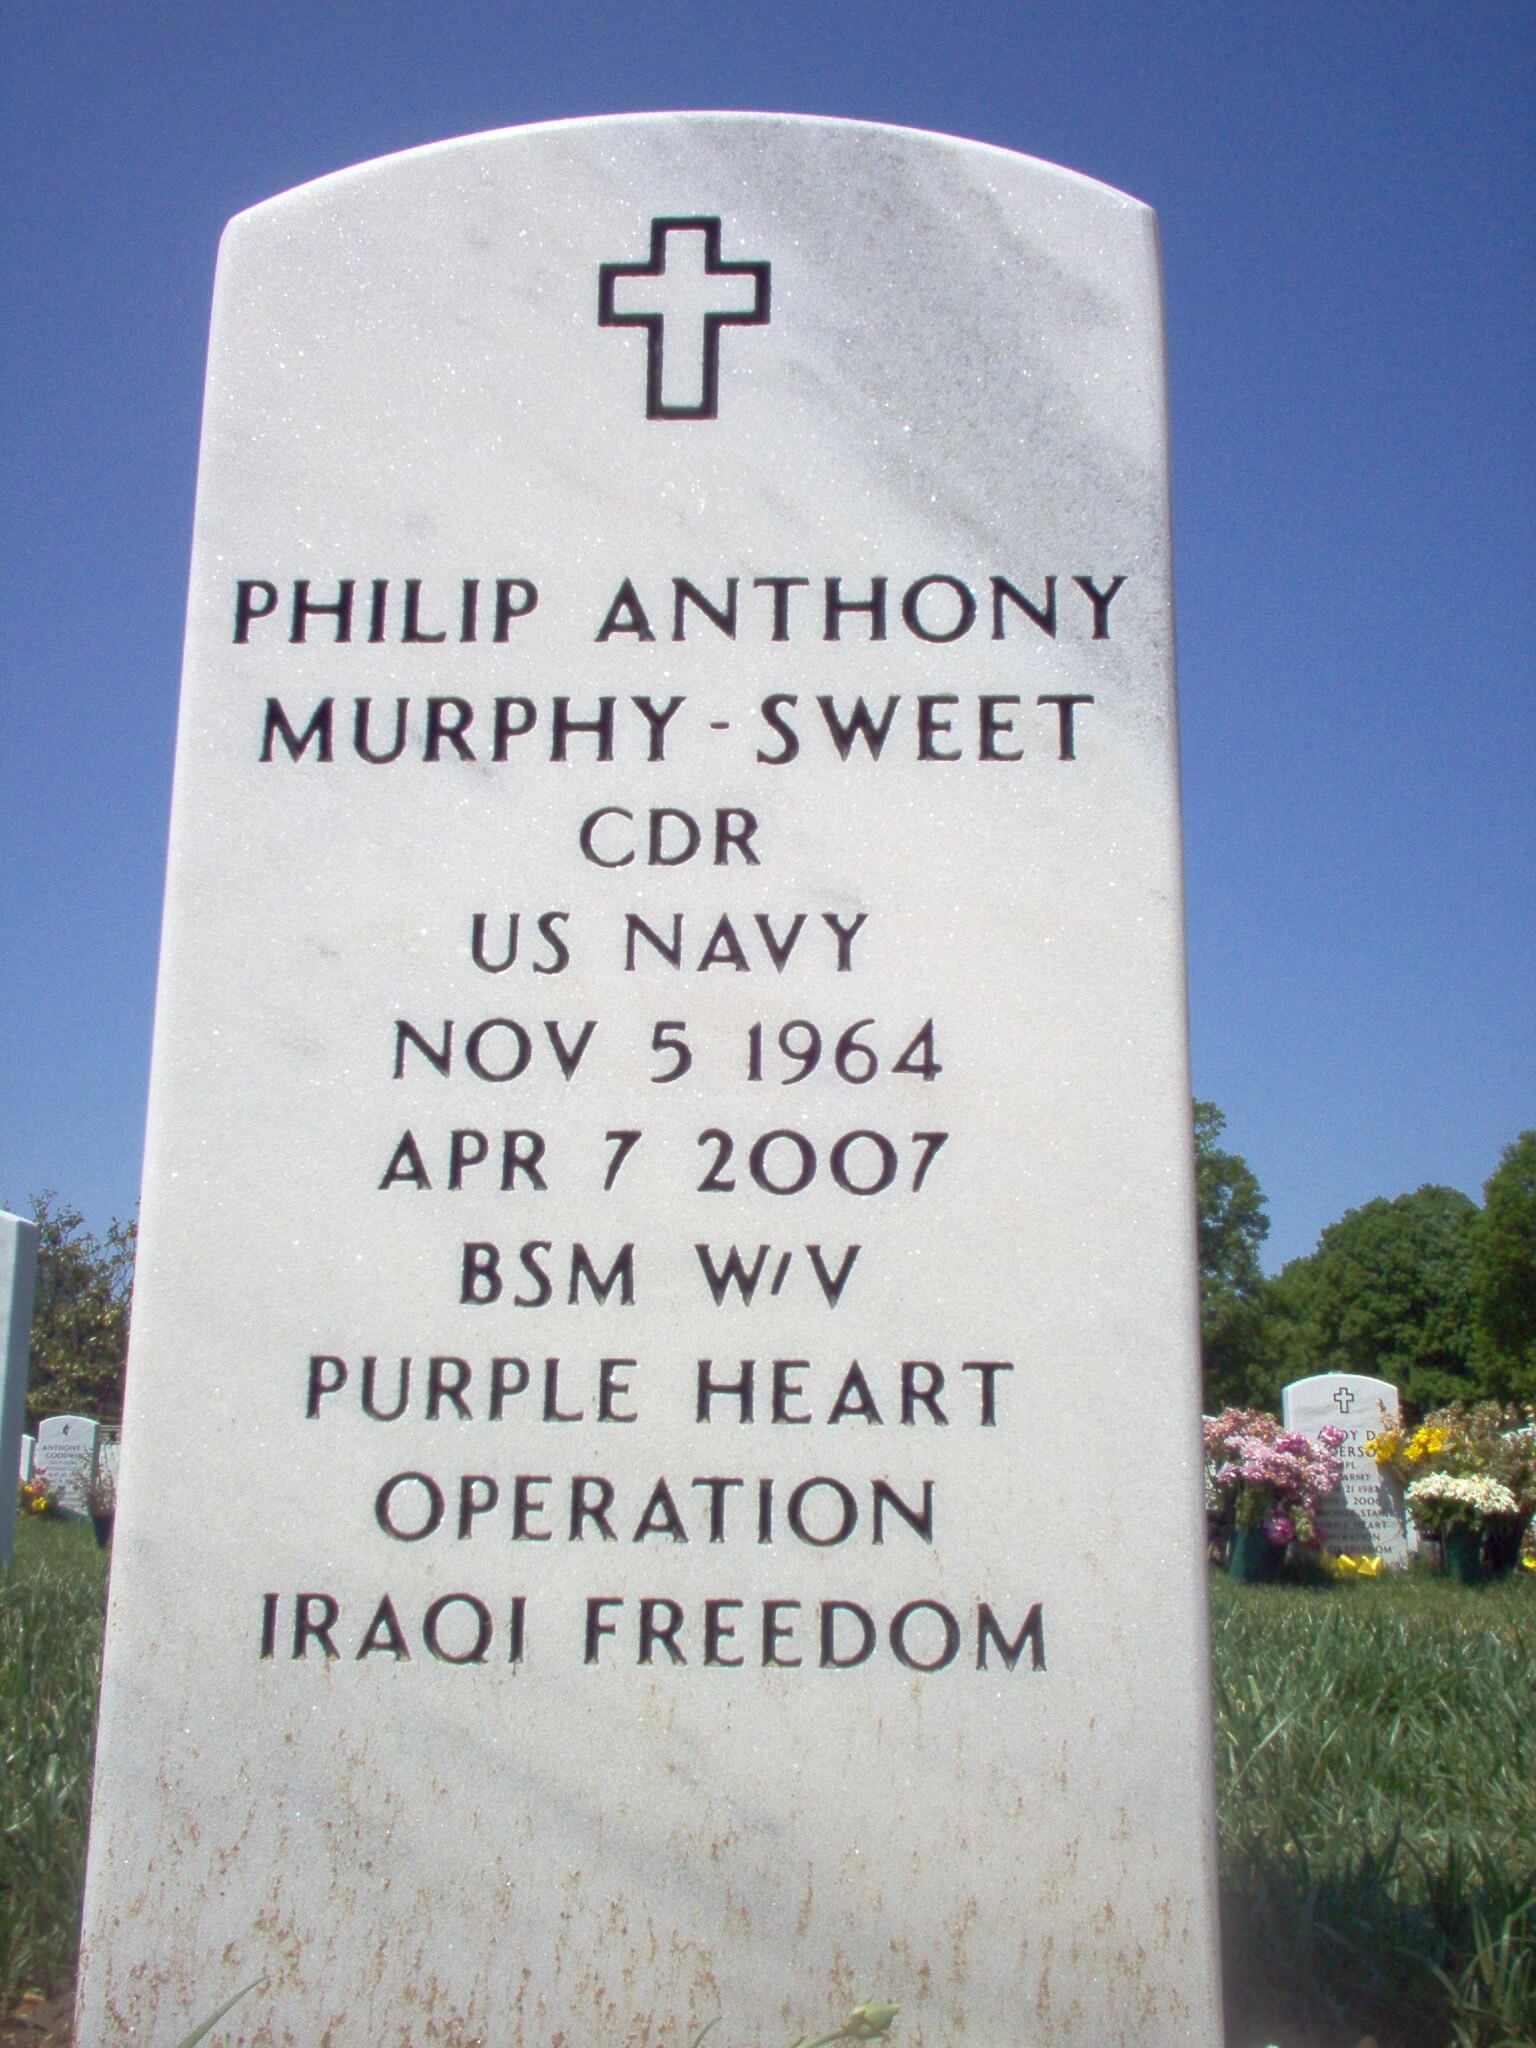 pamurphy-sweet-gravesite-photo-may-2007-001